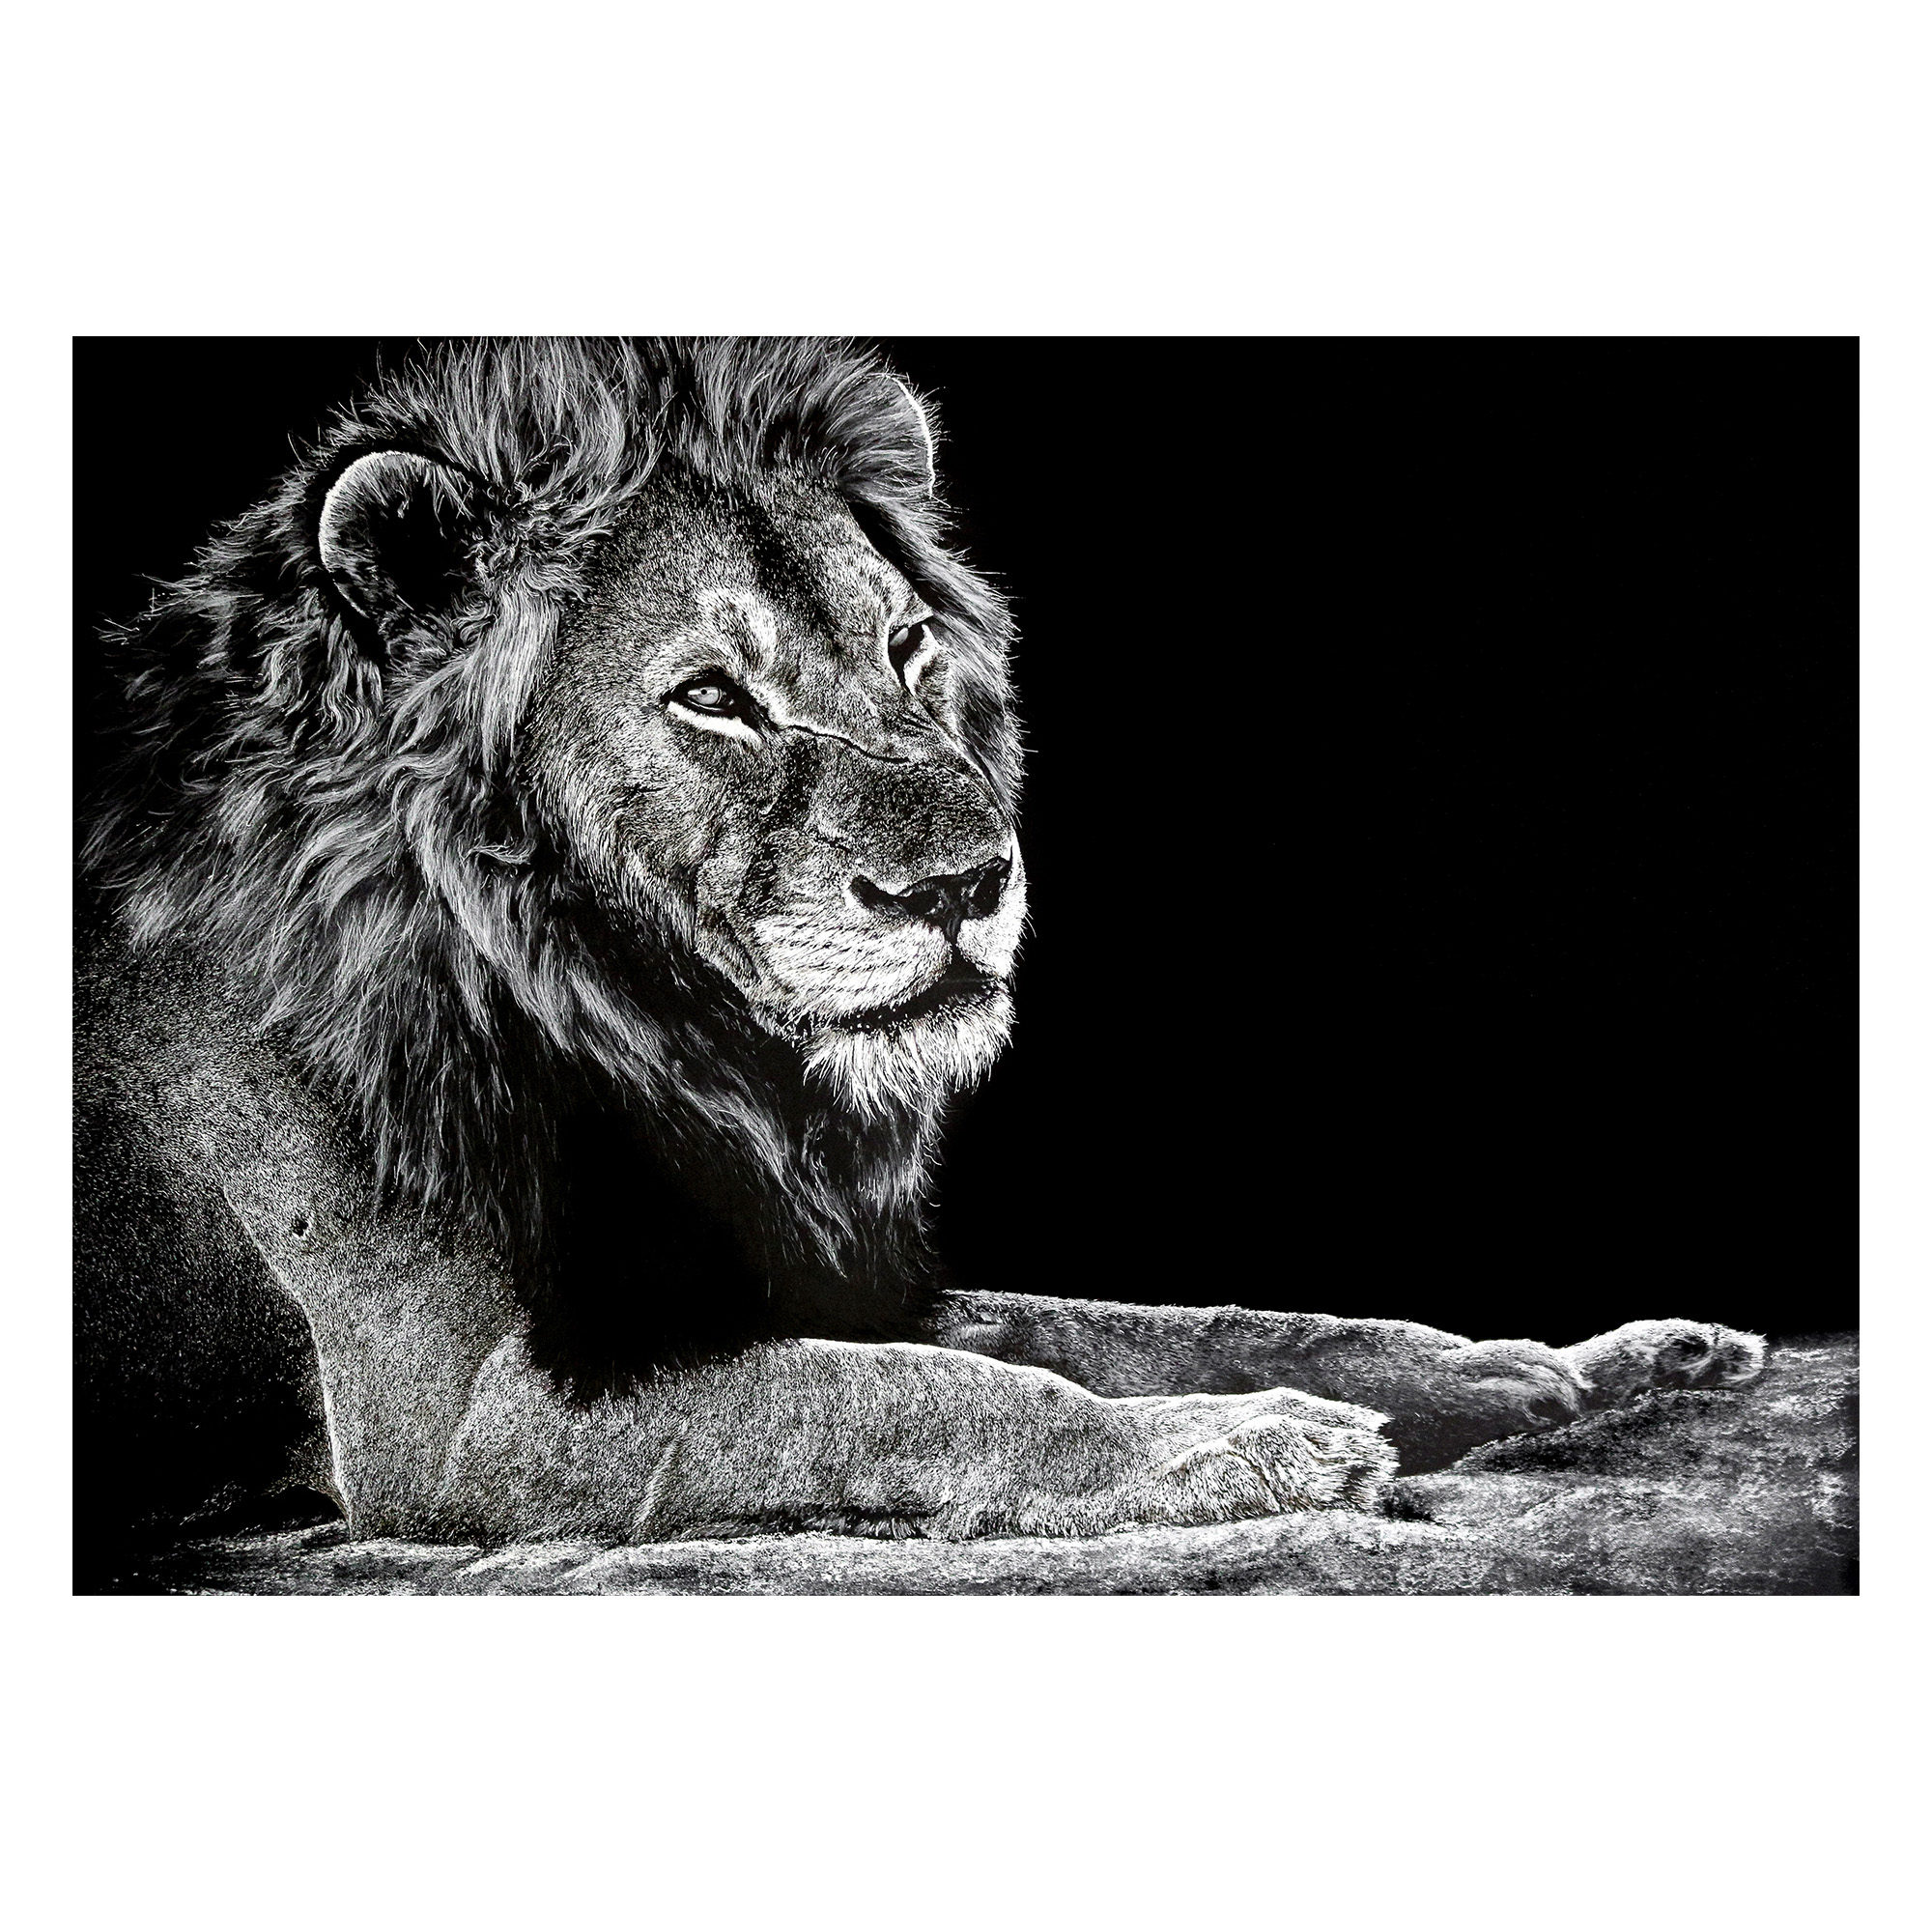 “Not a king, a lion”